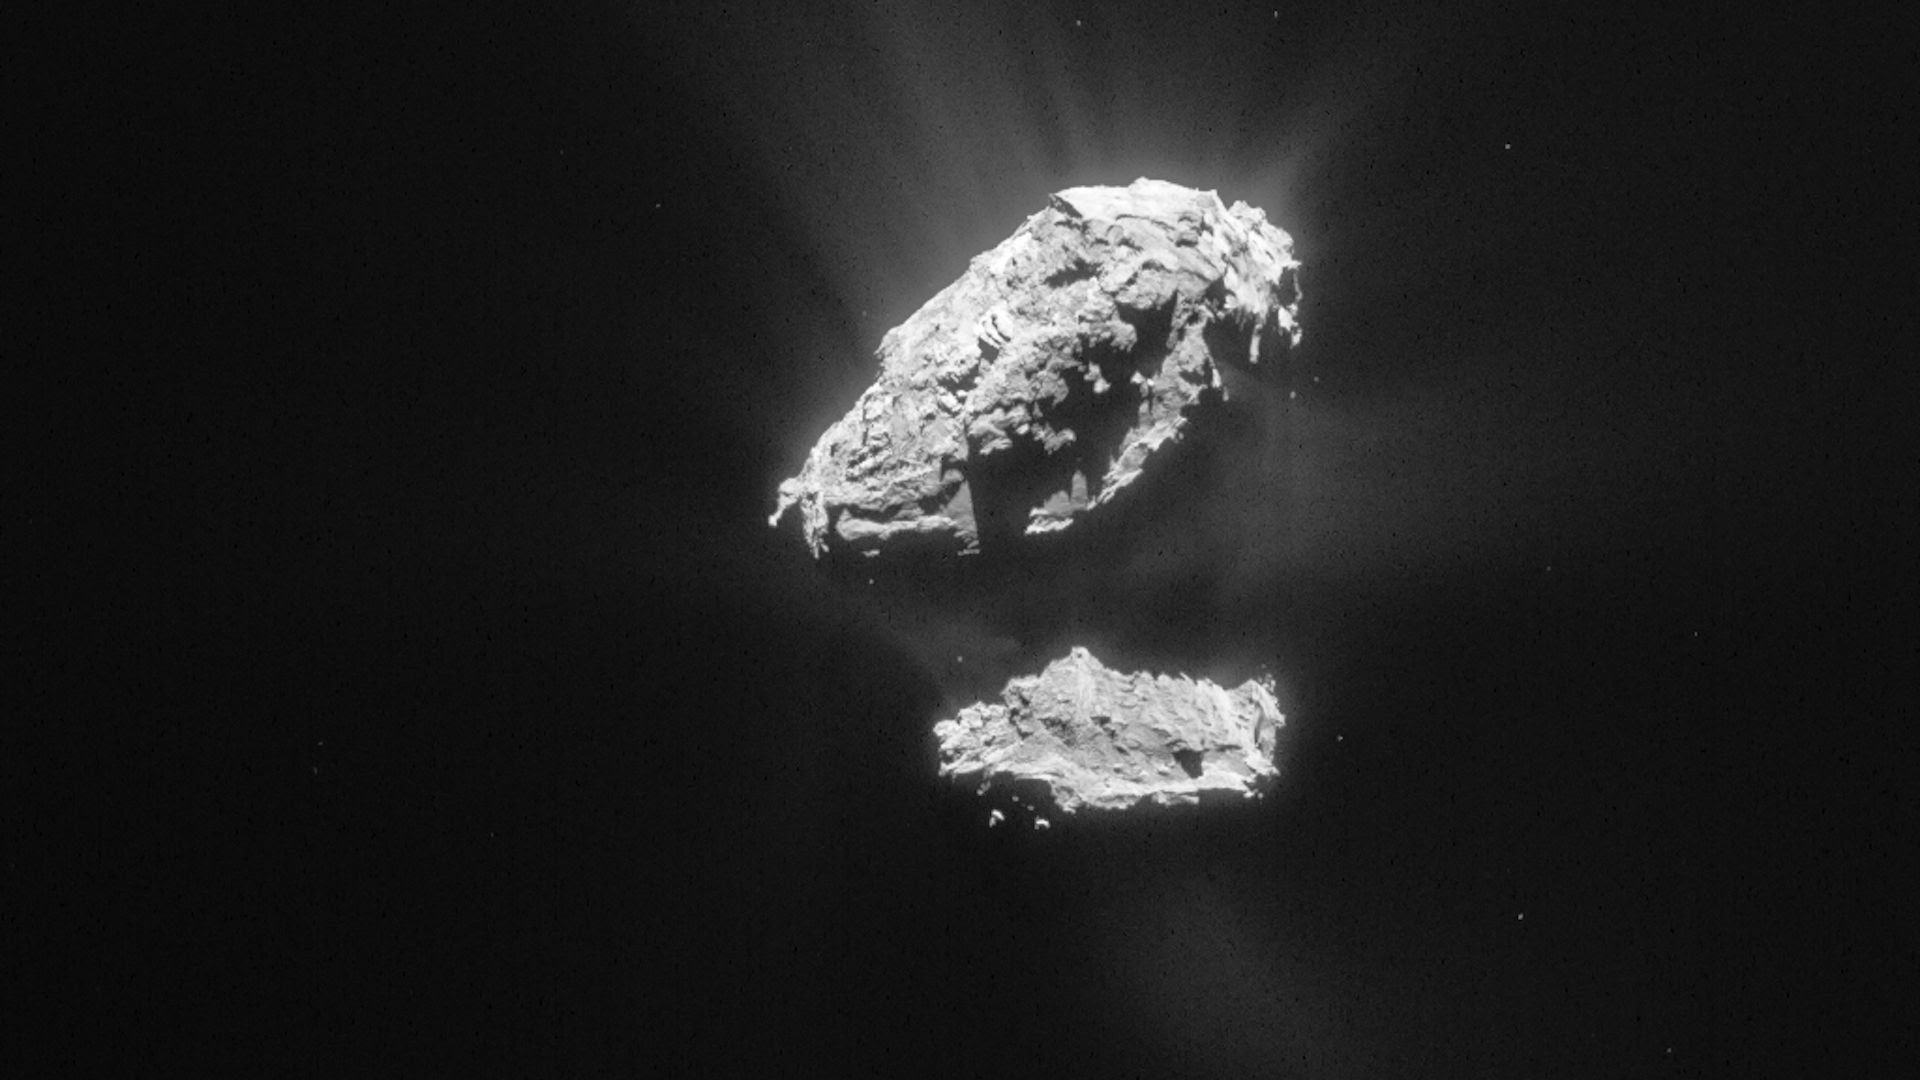 Comet 67P in deep space. Photo: ESA/Rosetta/NavCam